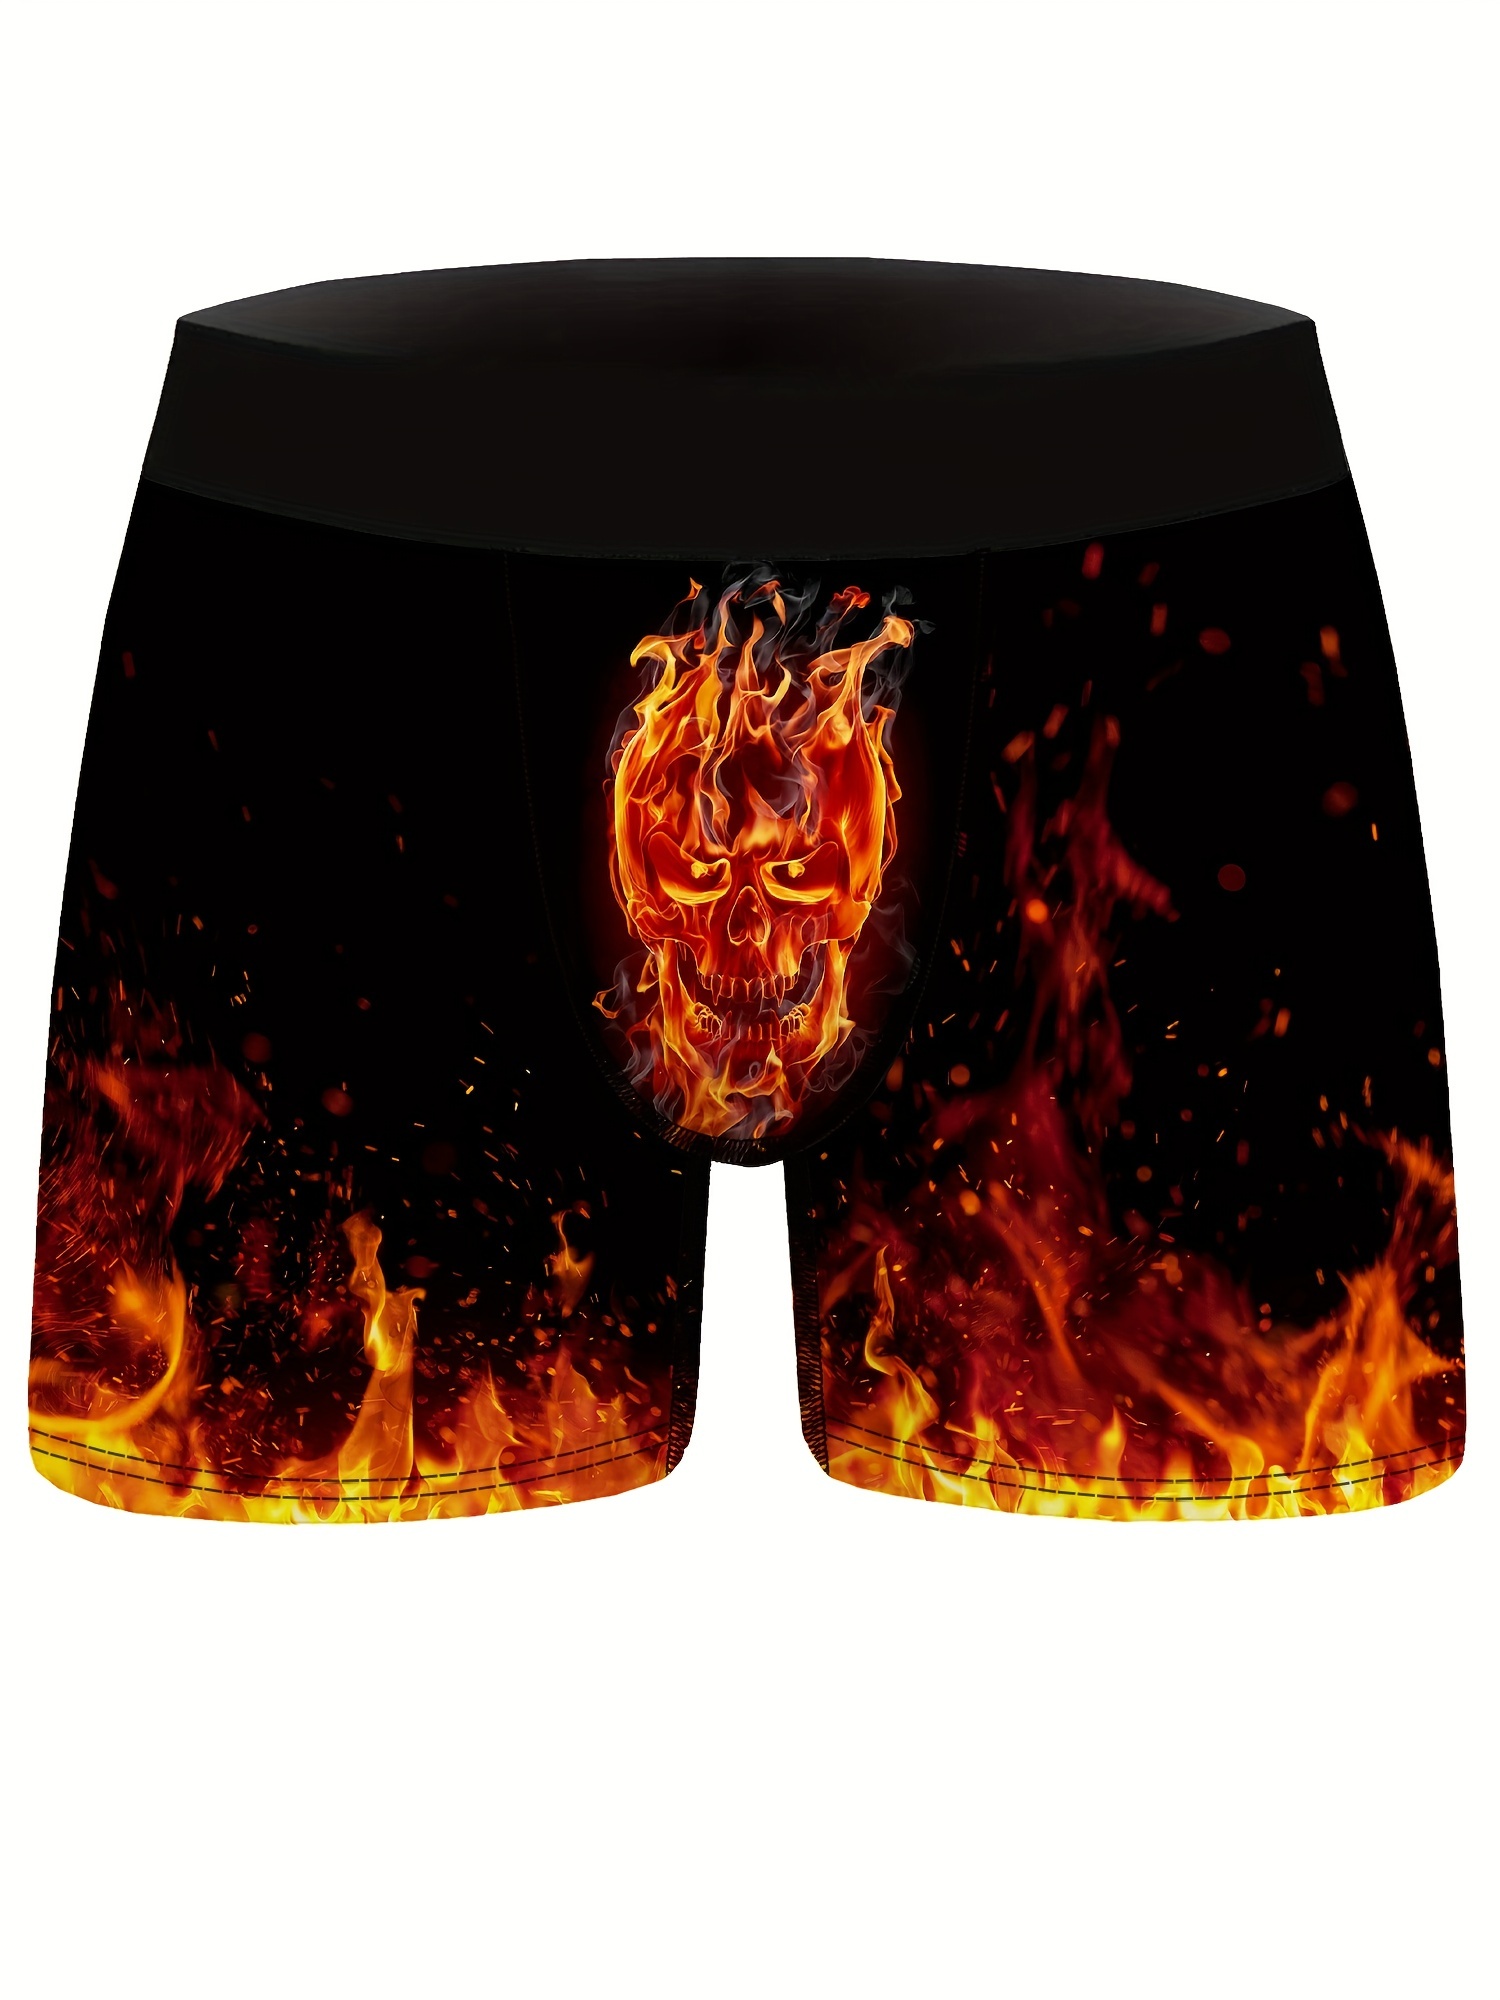 Men's Sexy Funny 3D Wolf Print Boxer Briefs Underwear Shorts Trunks